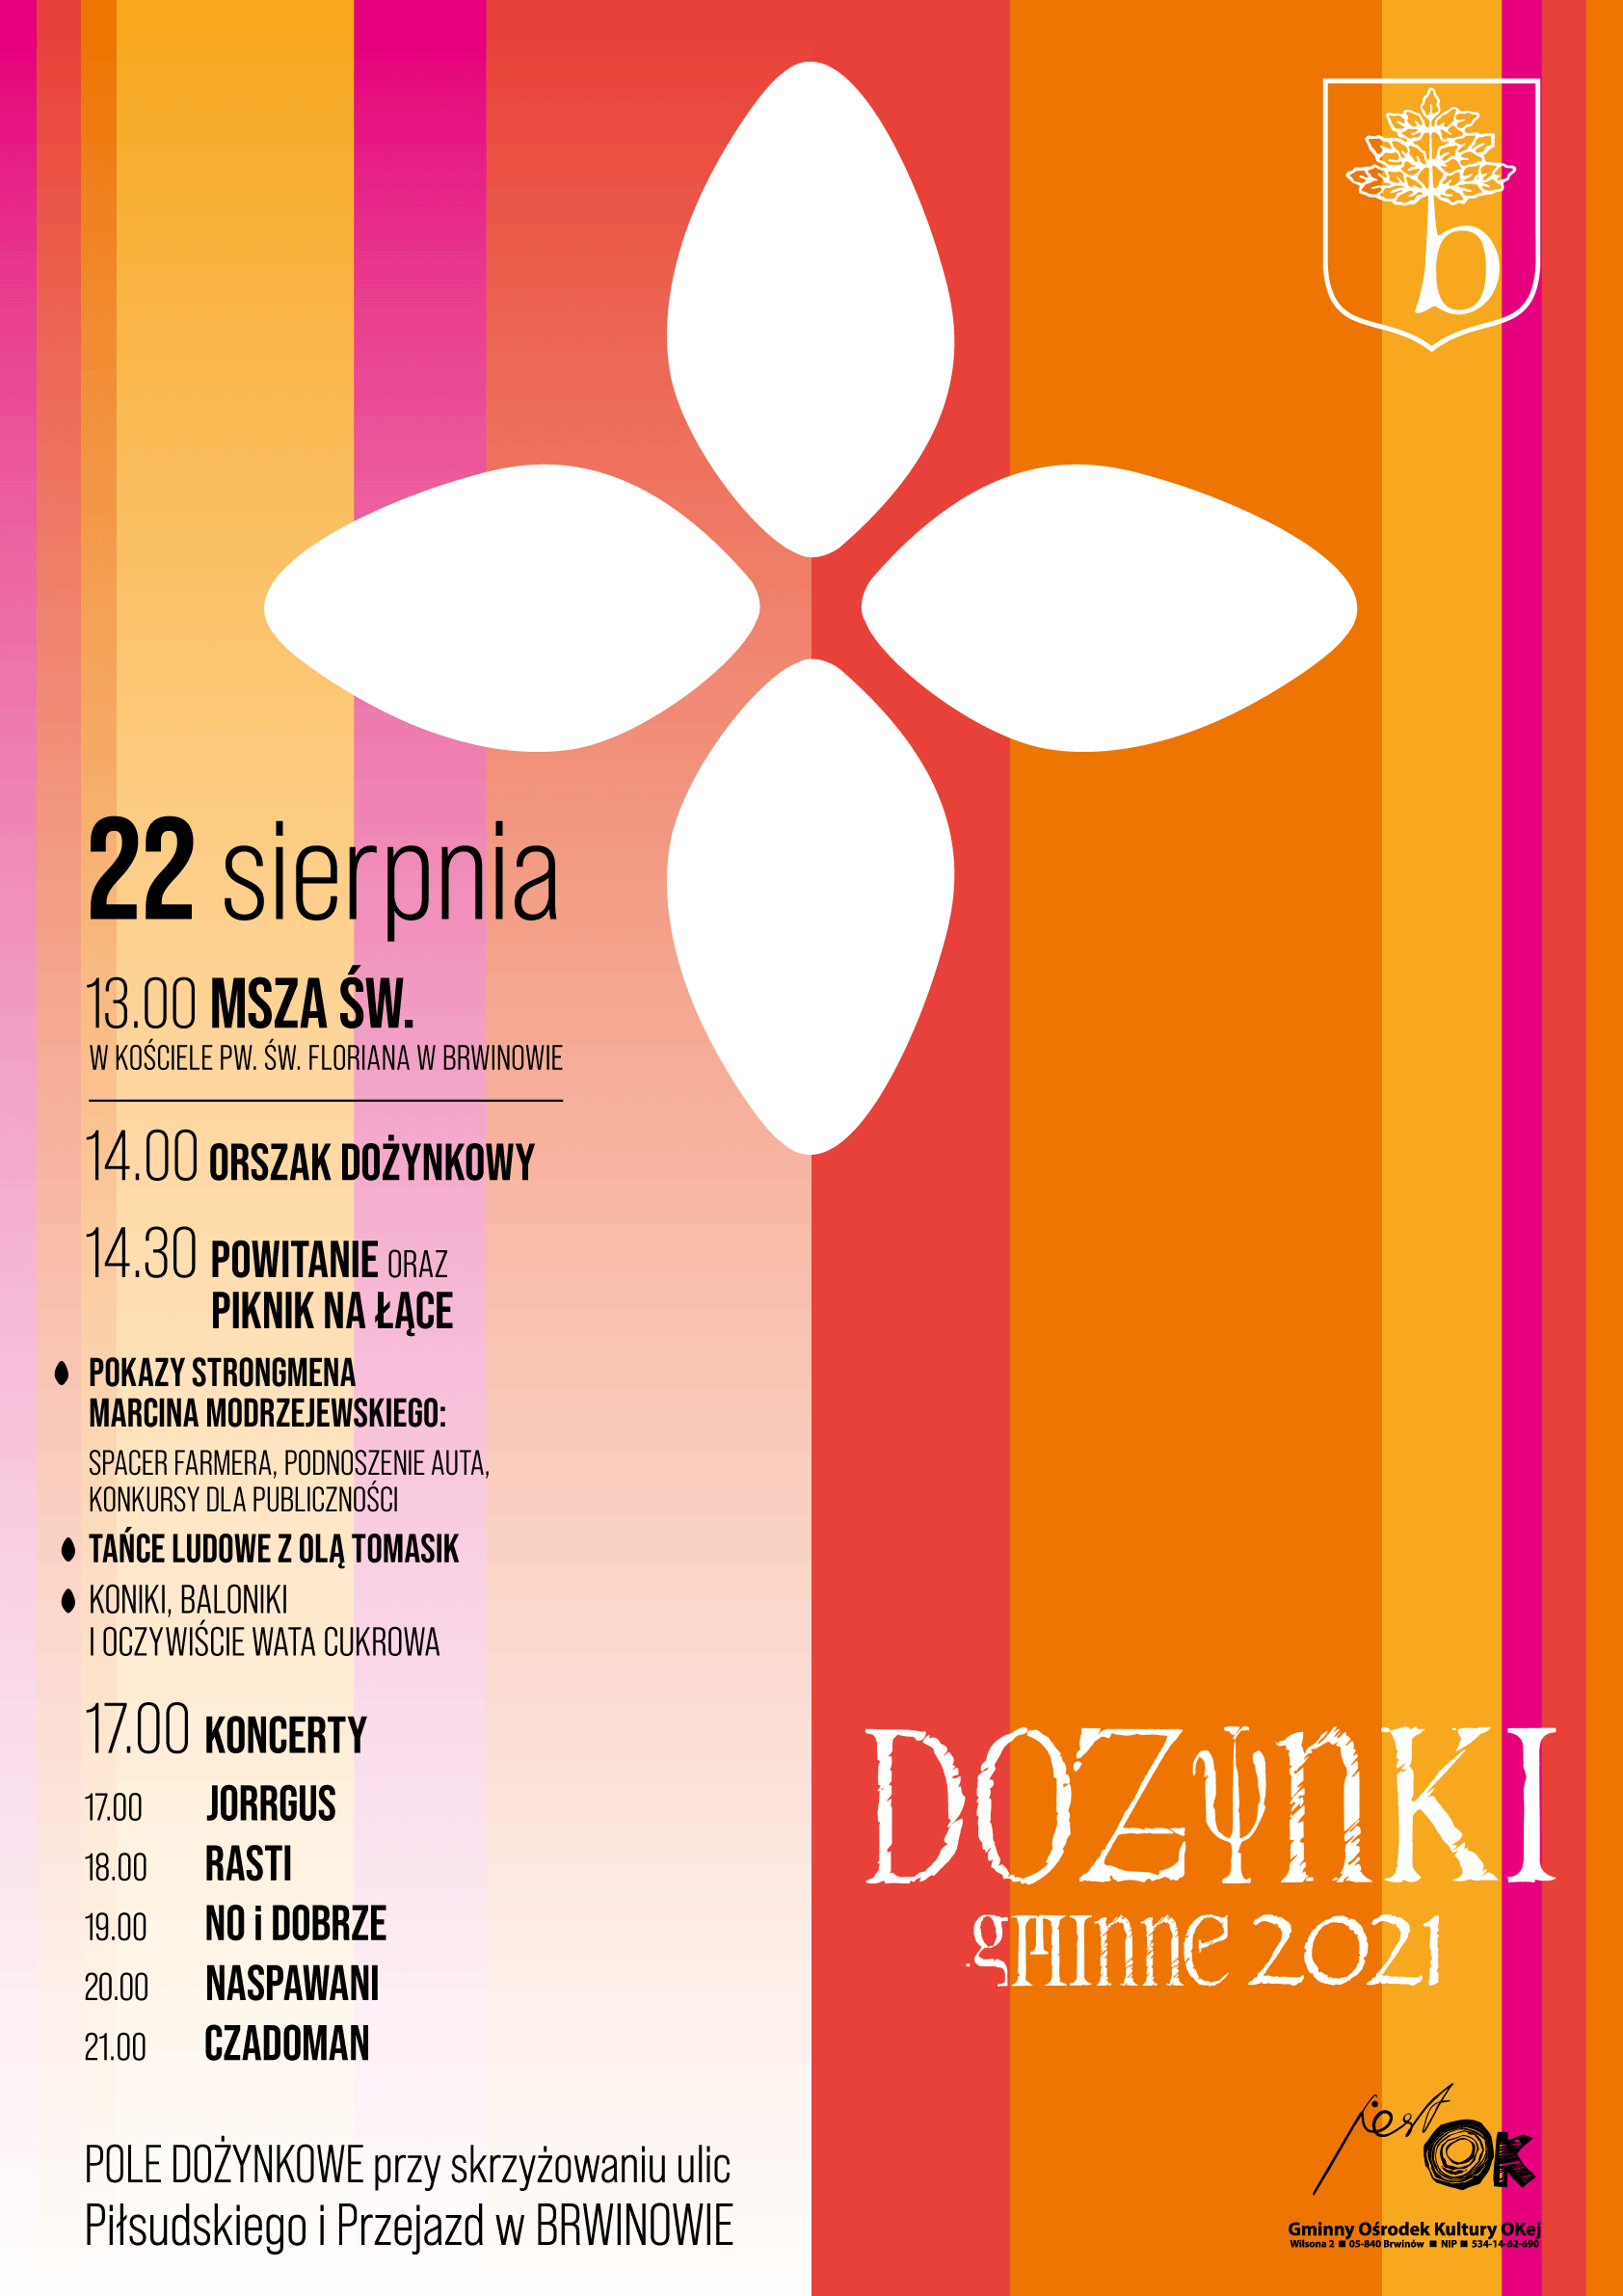 DOZ 2021 poster